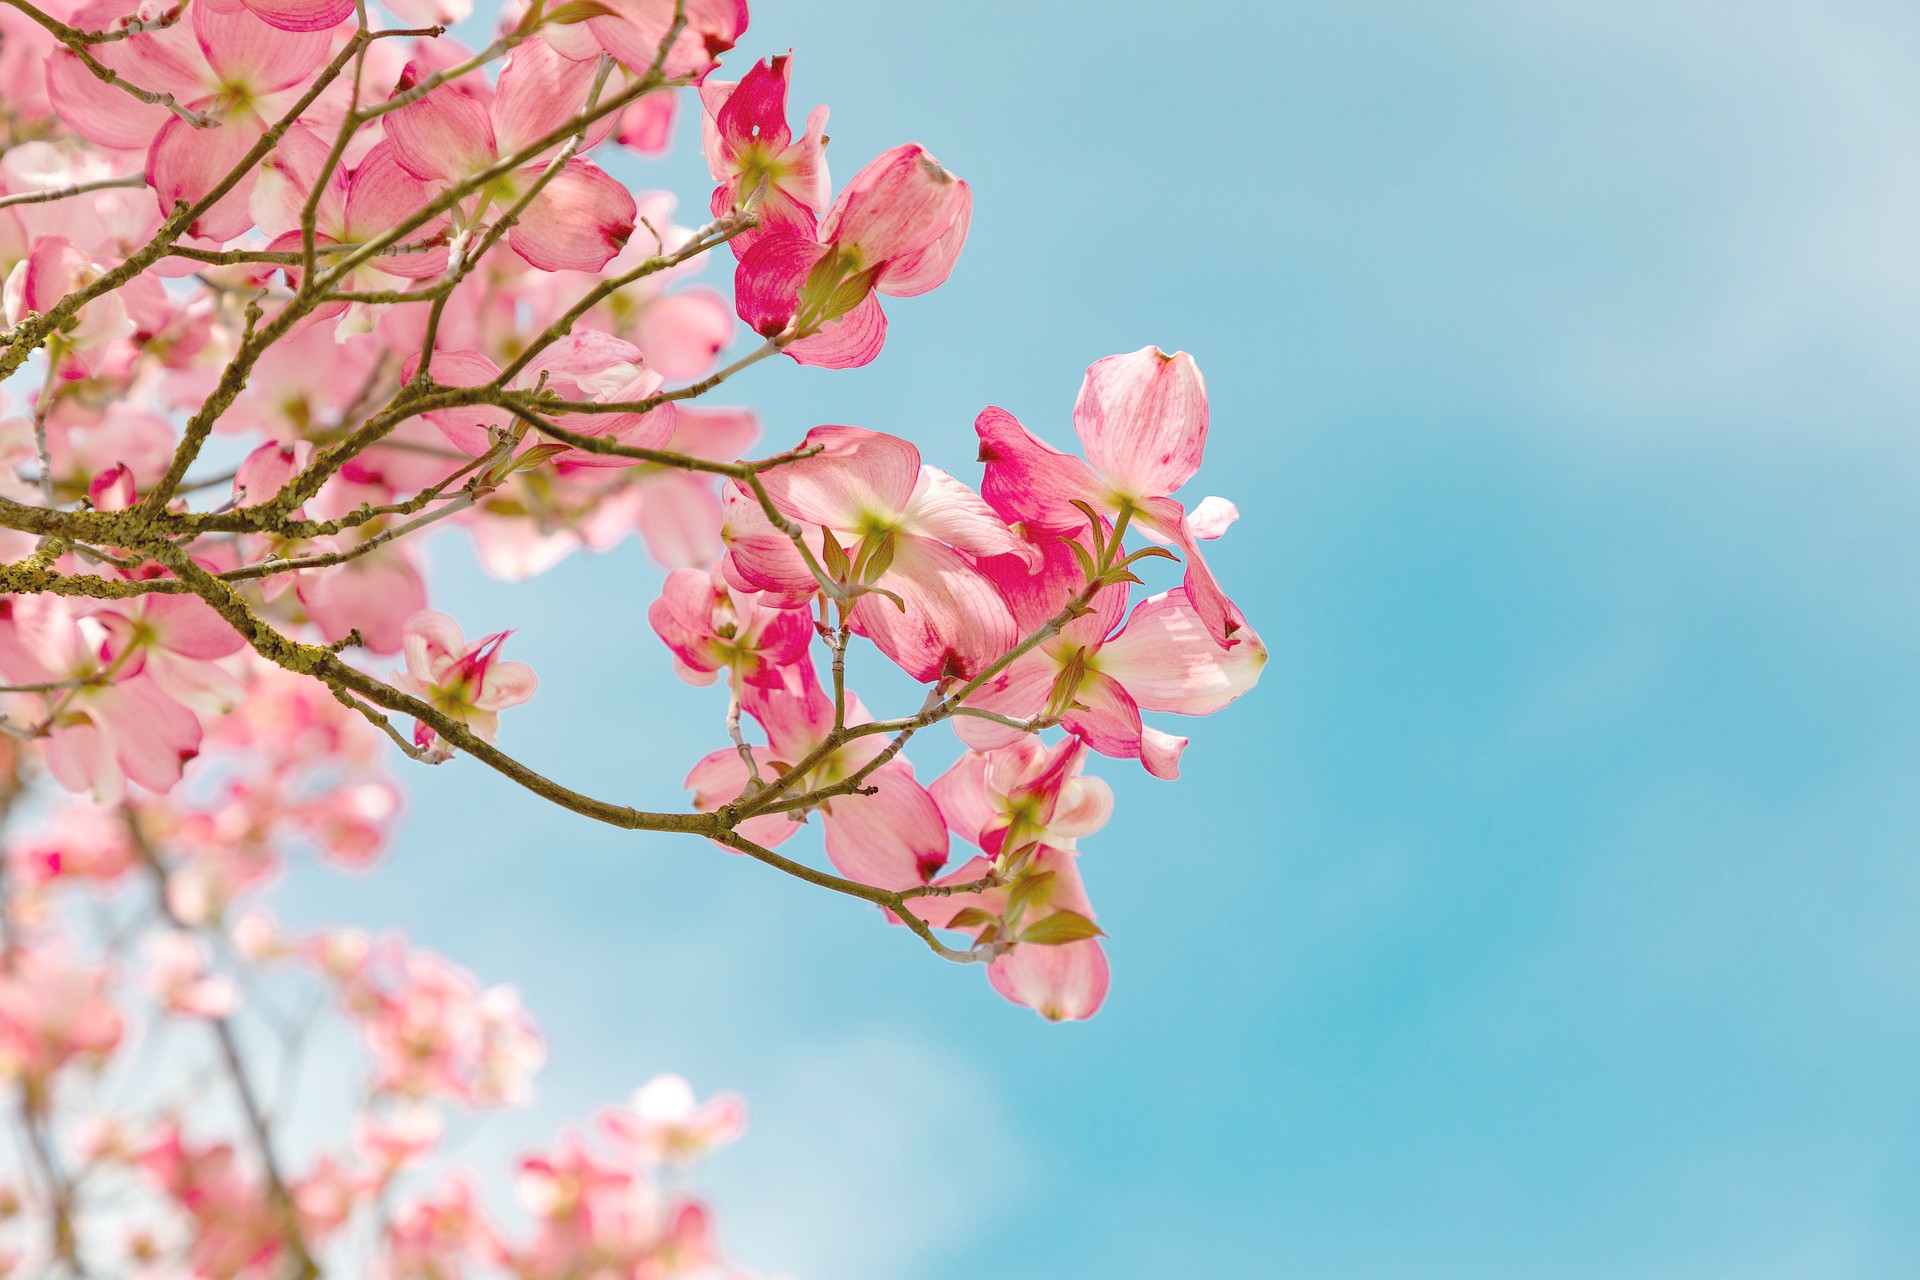 <img src="cherry.jpg" alt="cherry pink blossom tree"/> 